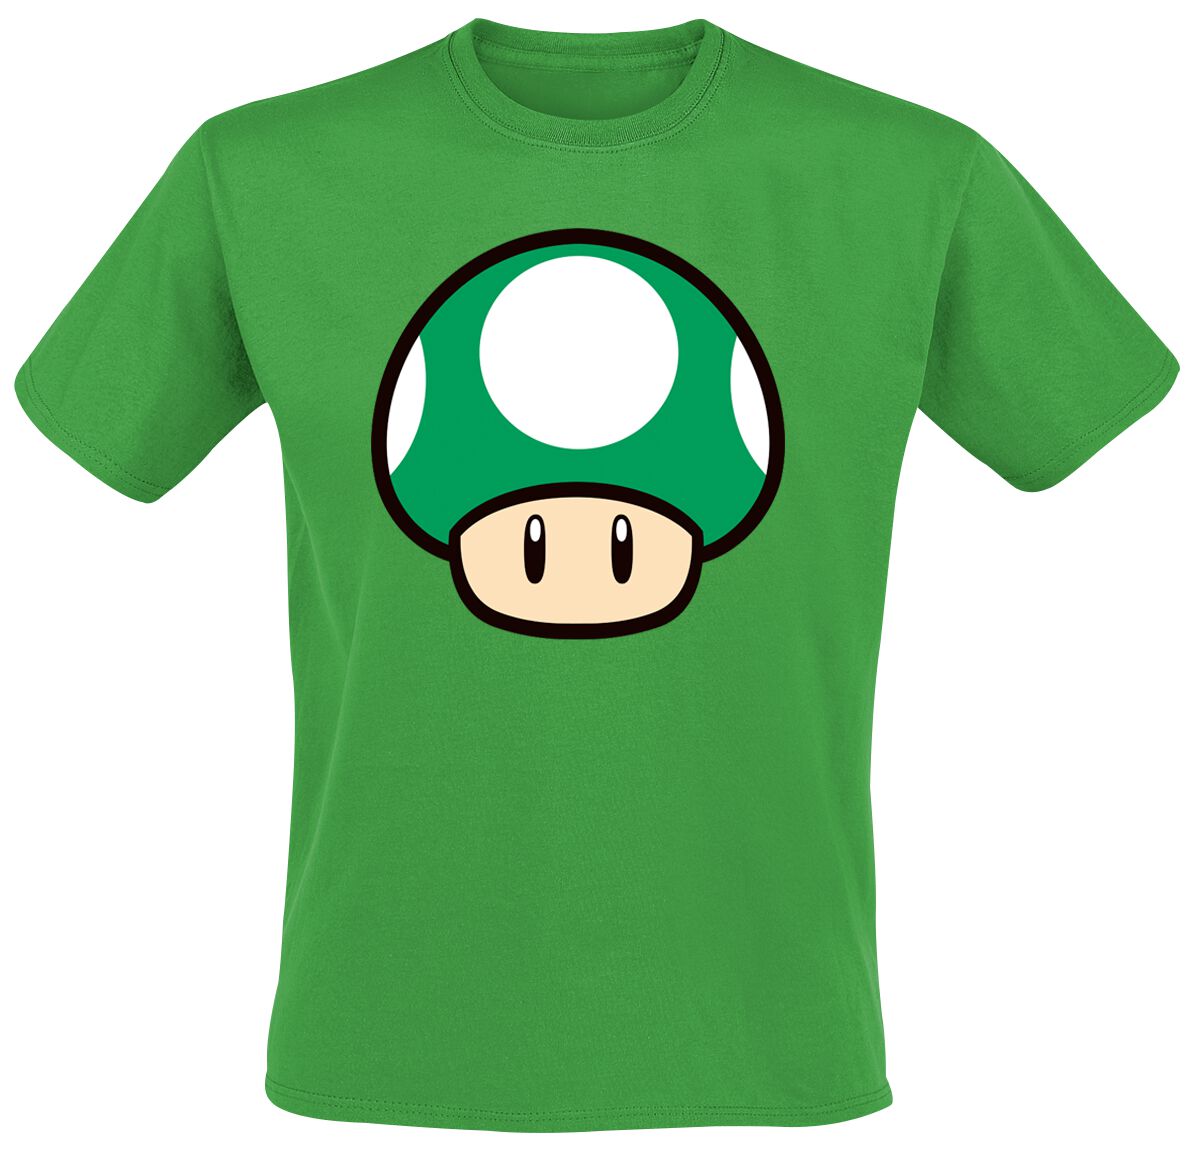 Super Mario Mushroom T-Shirt grün in XL